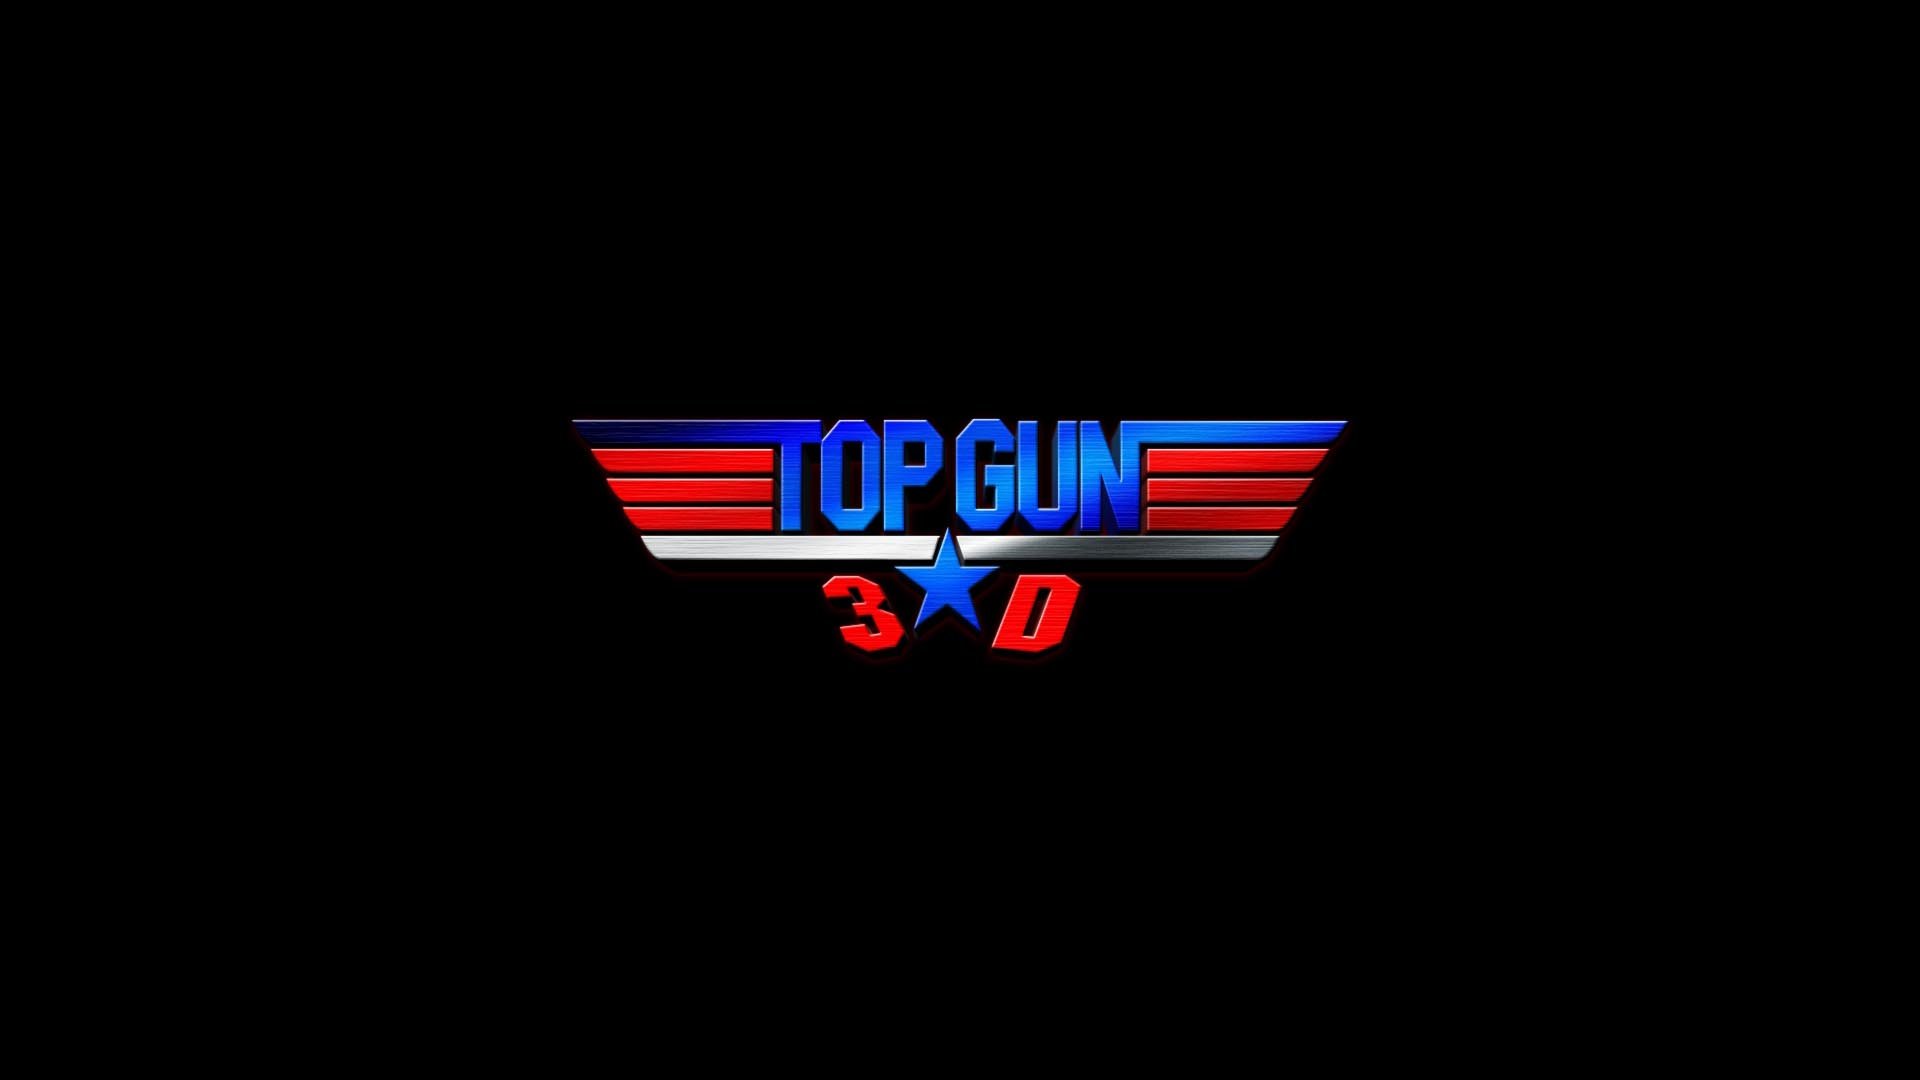 Download full hd 1080p Top Gun PC wallpaper ID:340258 for free